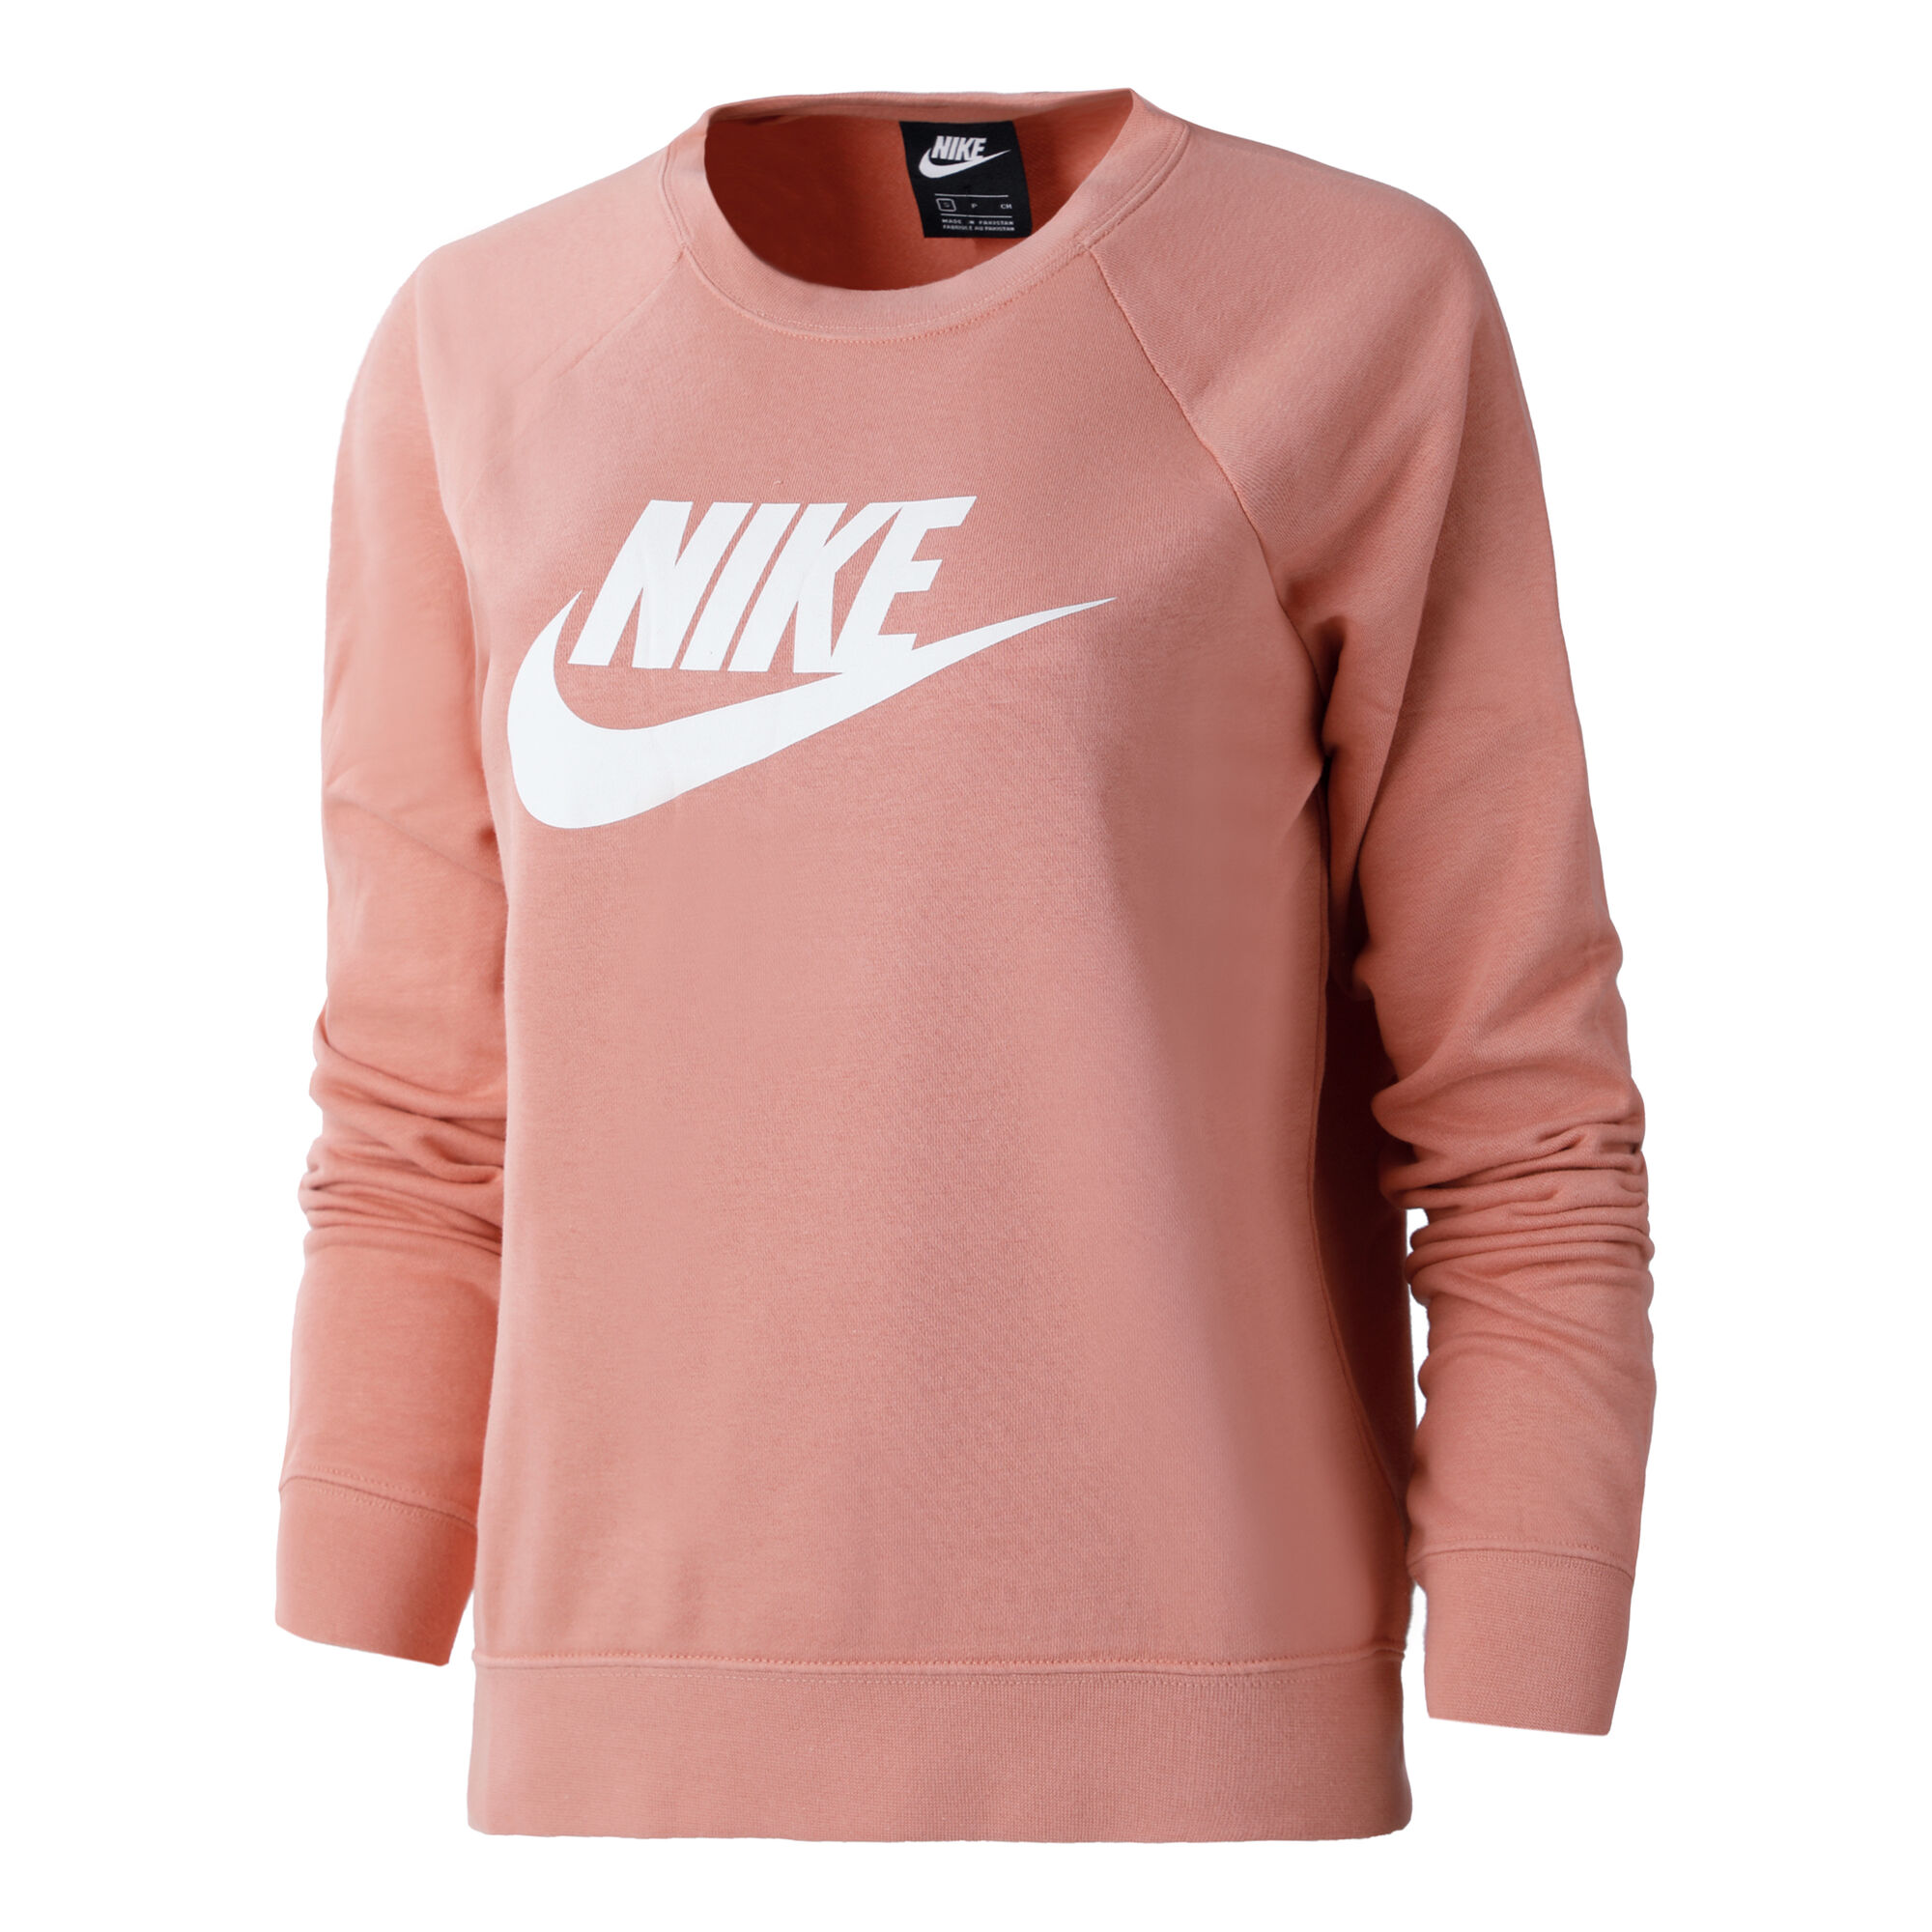 buy Nike Sportswear Essential Crew Sweatshirt Women - Apricot, White ...